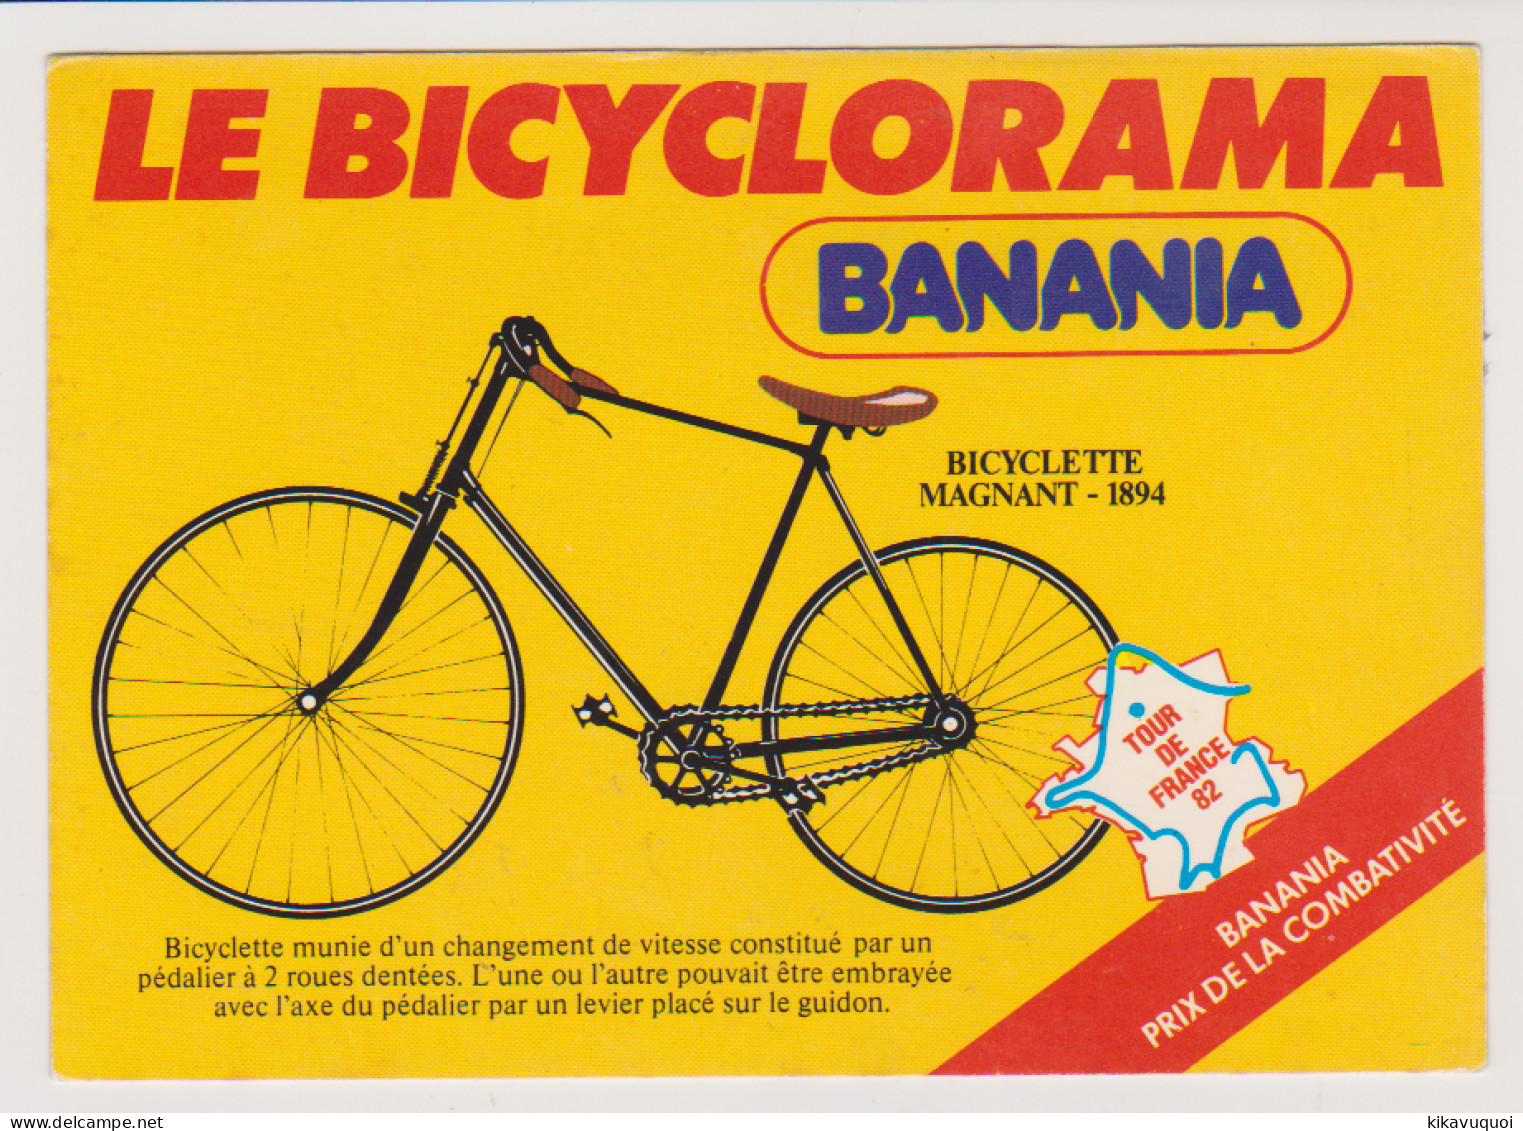 BANANIA - TOUR DE FRANCE 1982 - LE BICYCLORAMA - VELO - CYCLE - CARTE POSTALE ANCIENNE - Motorfietsen